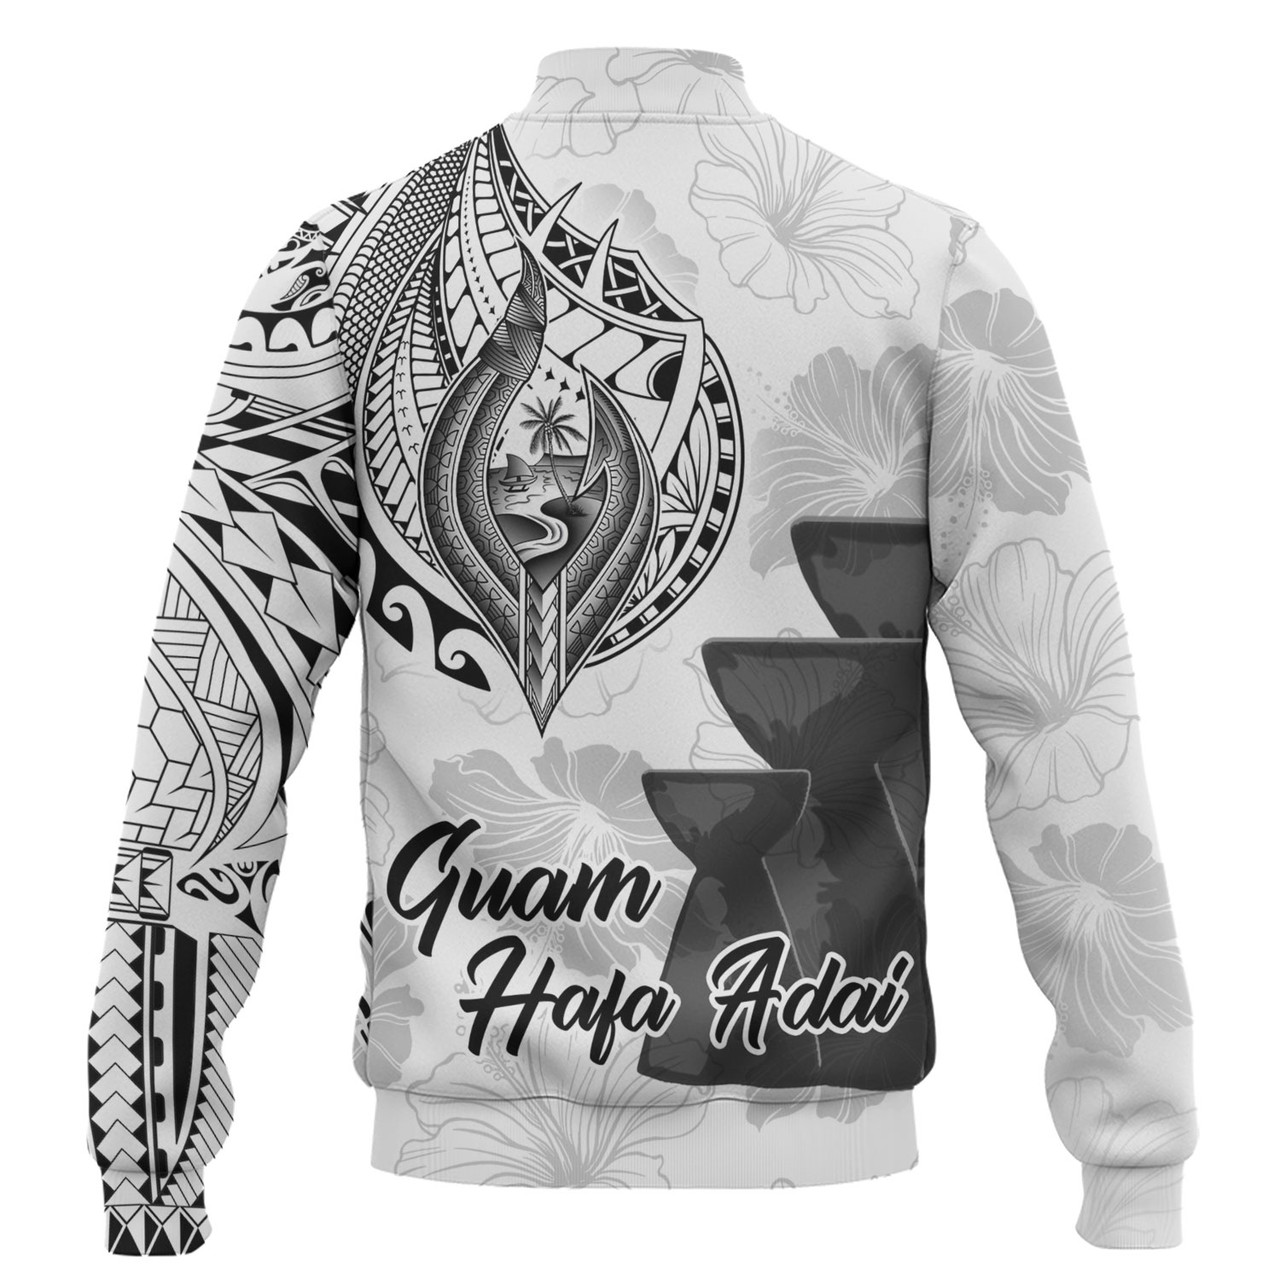 Guam Baseball Jacket Hafa Adai Guam Seal Half Sleeve Tattoo